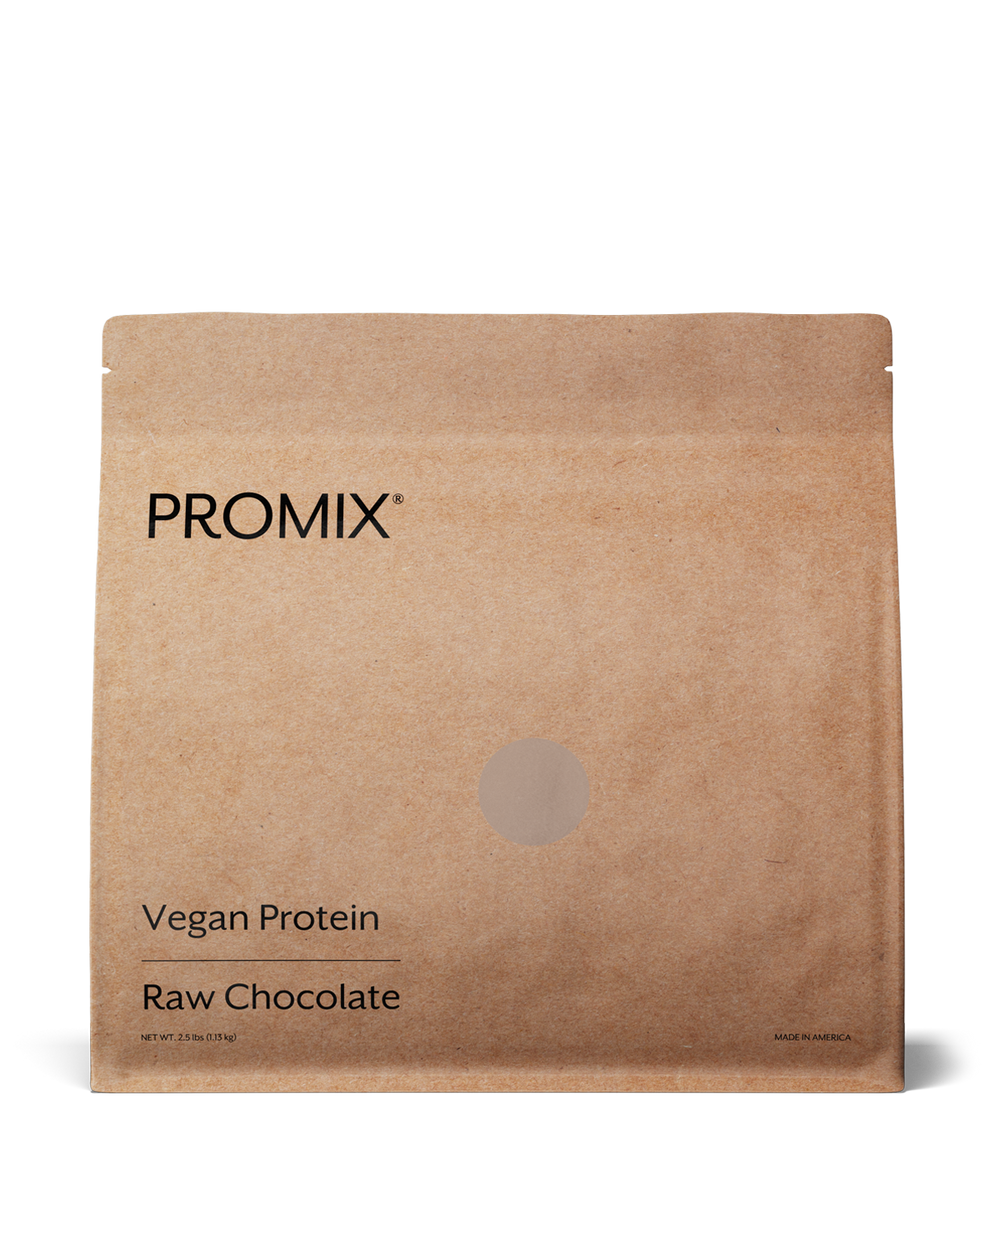 Raw Chocolate Vegan Protein Powder, 2.5 LB Bag